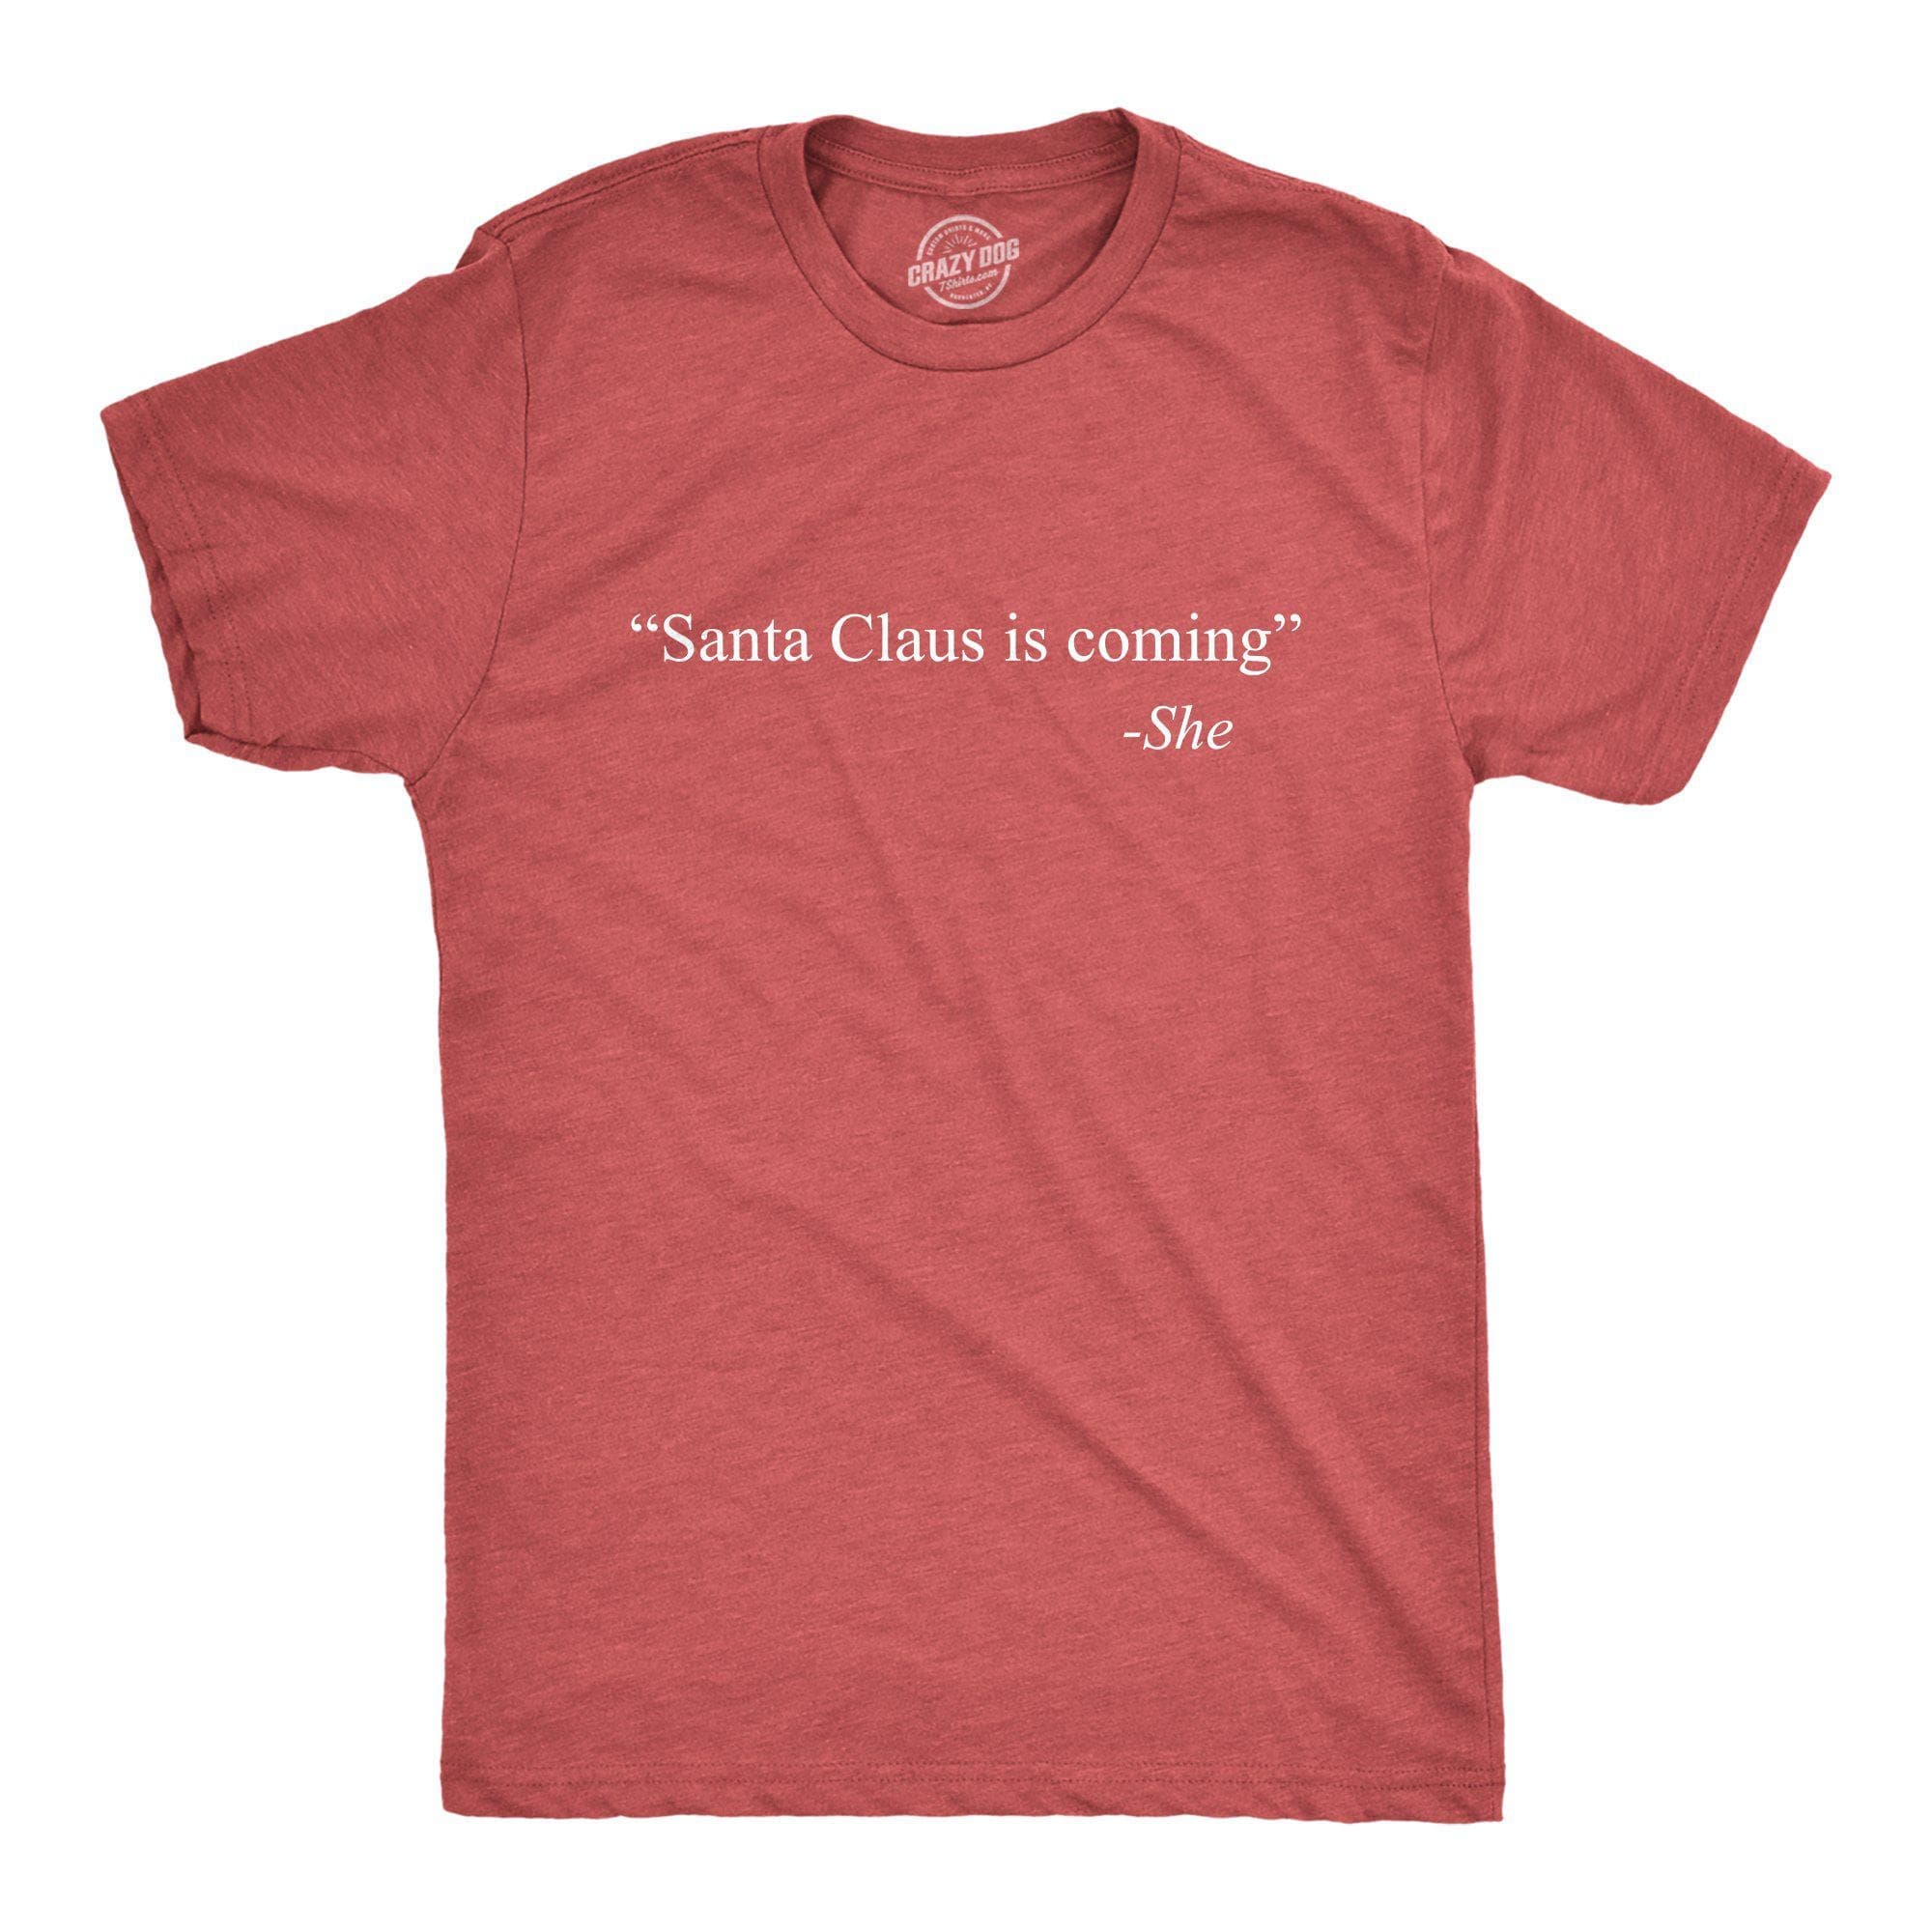 Santa Claus Is Coming -She Men's Tshirt - Crazy Dog T-Shirts